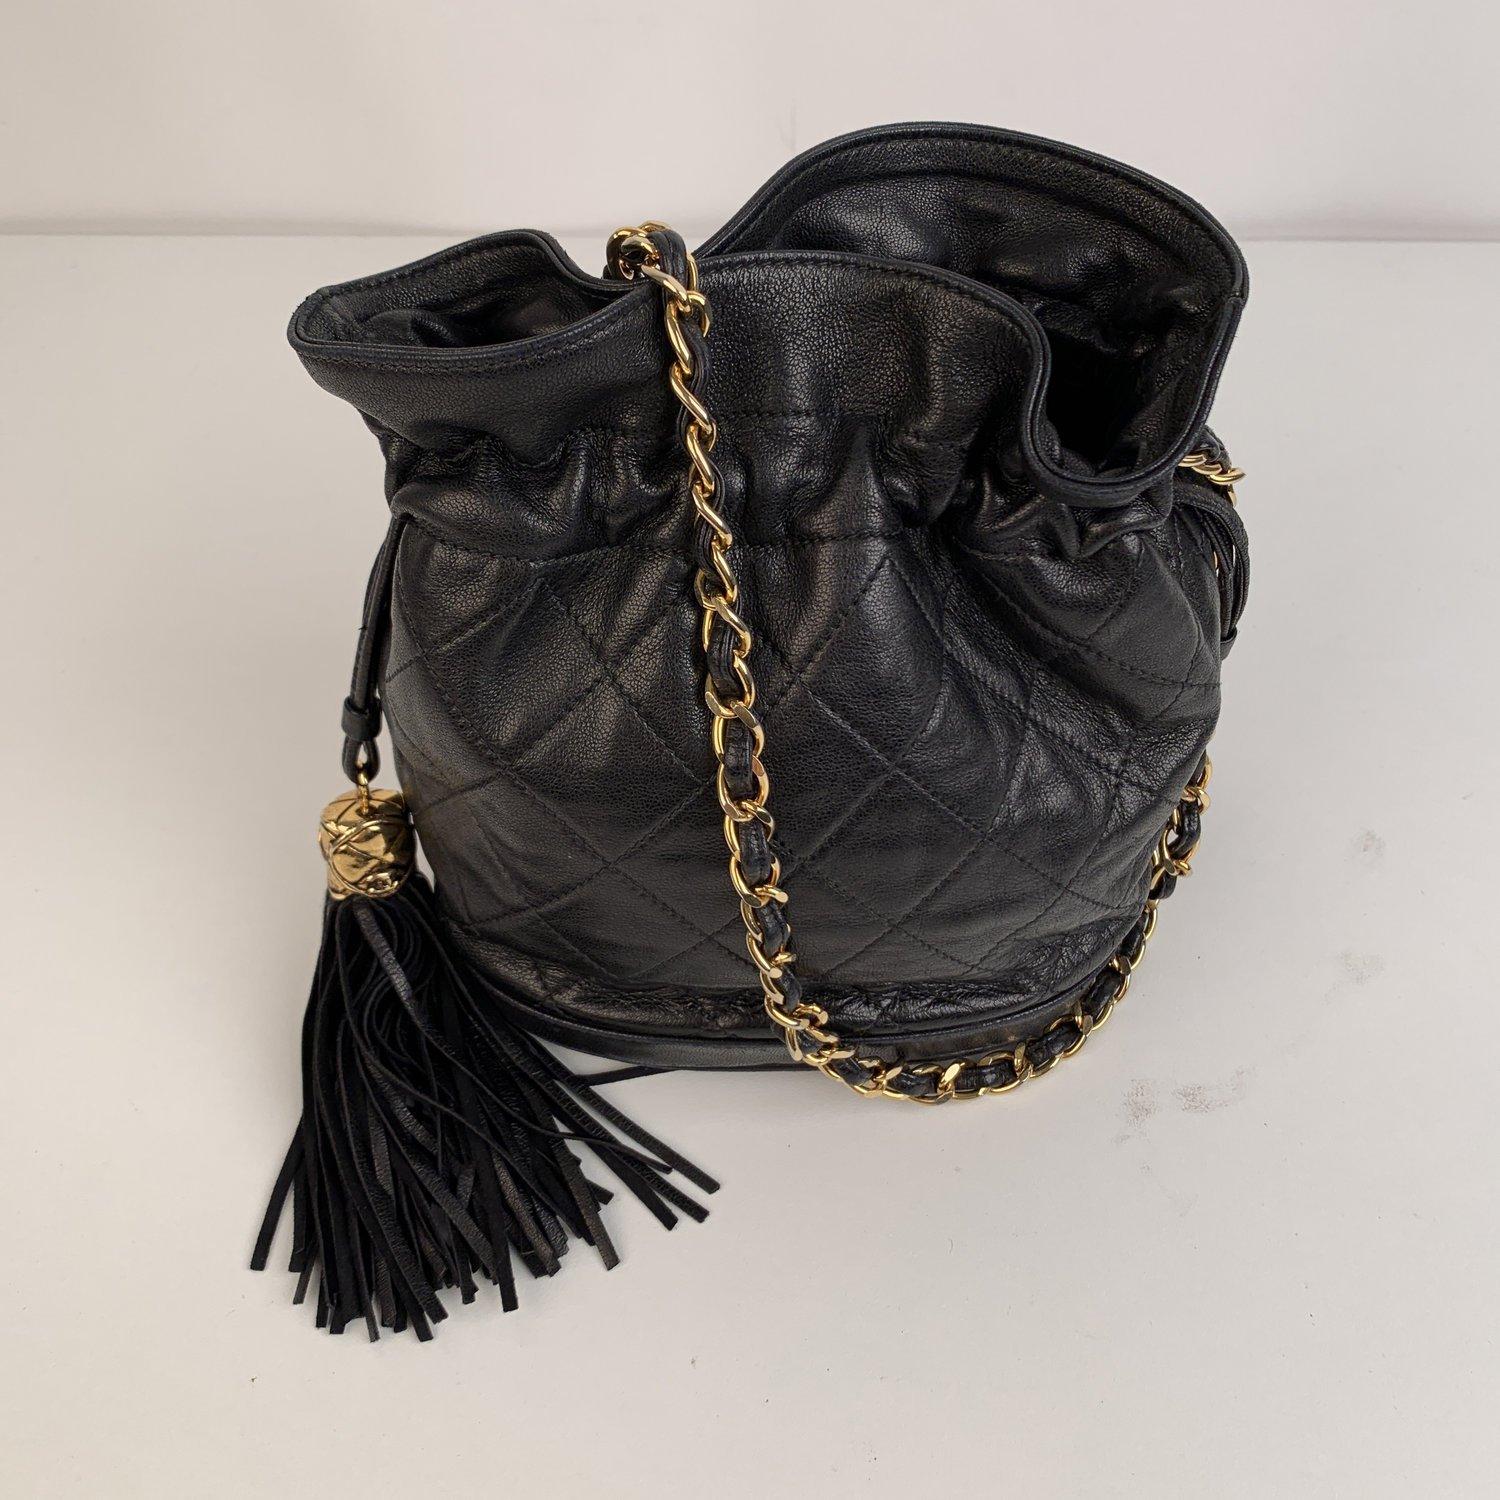 Chanel Vintage 1989 Black Quilted Leather Small Bucket Shoulder Bag 1